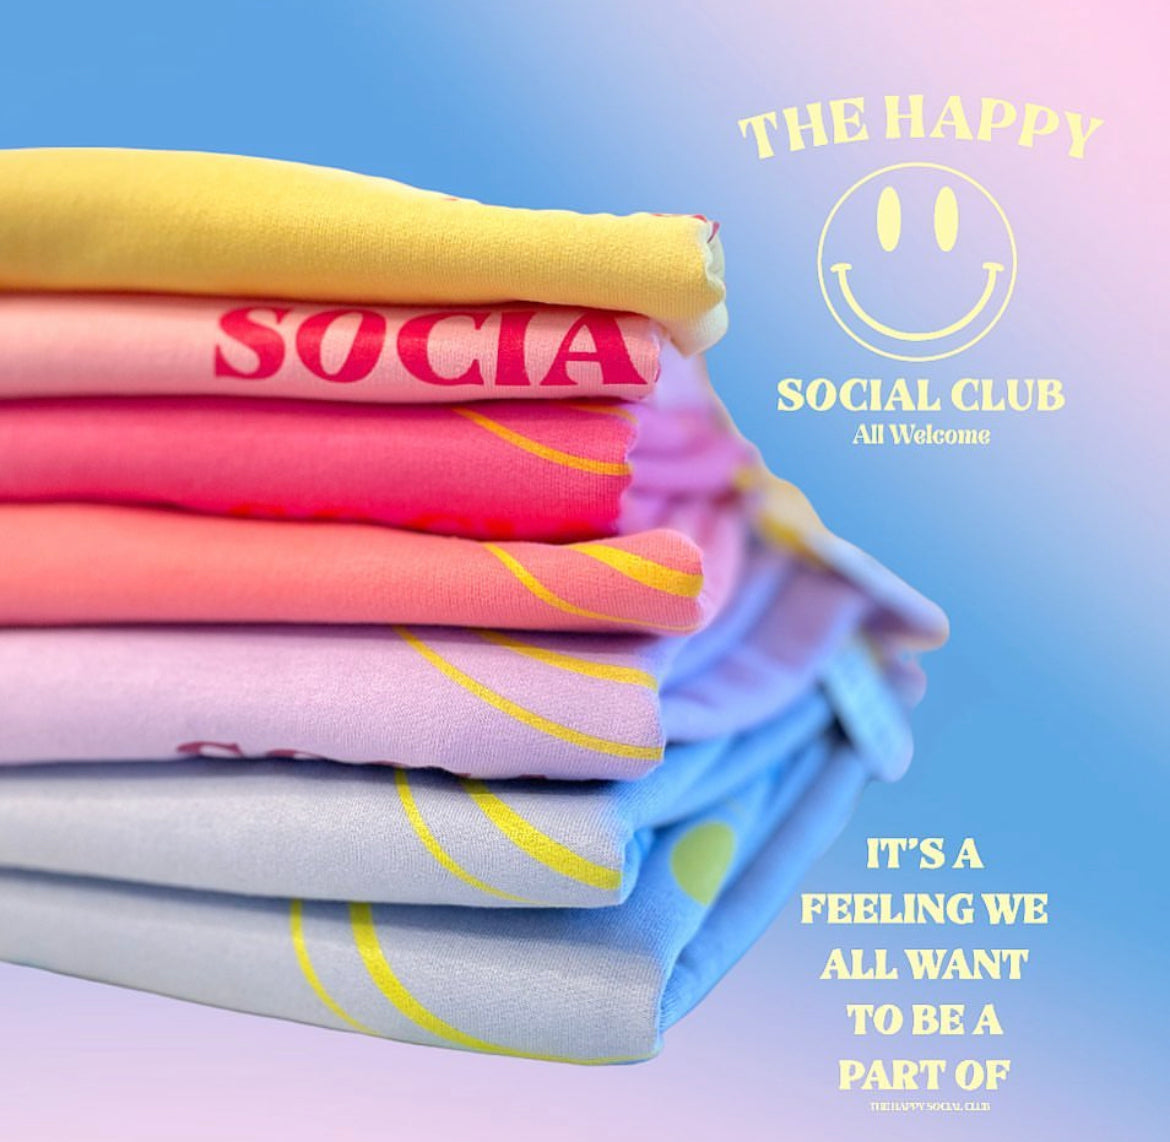 THE HAPPY SOCIAL CLUB Crew Neck Sweatshirt